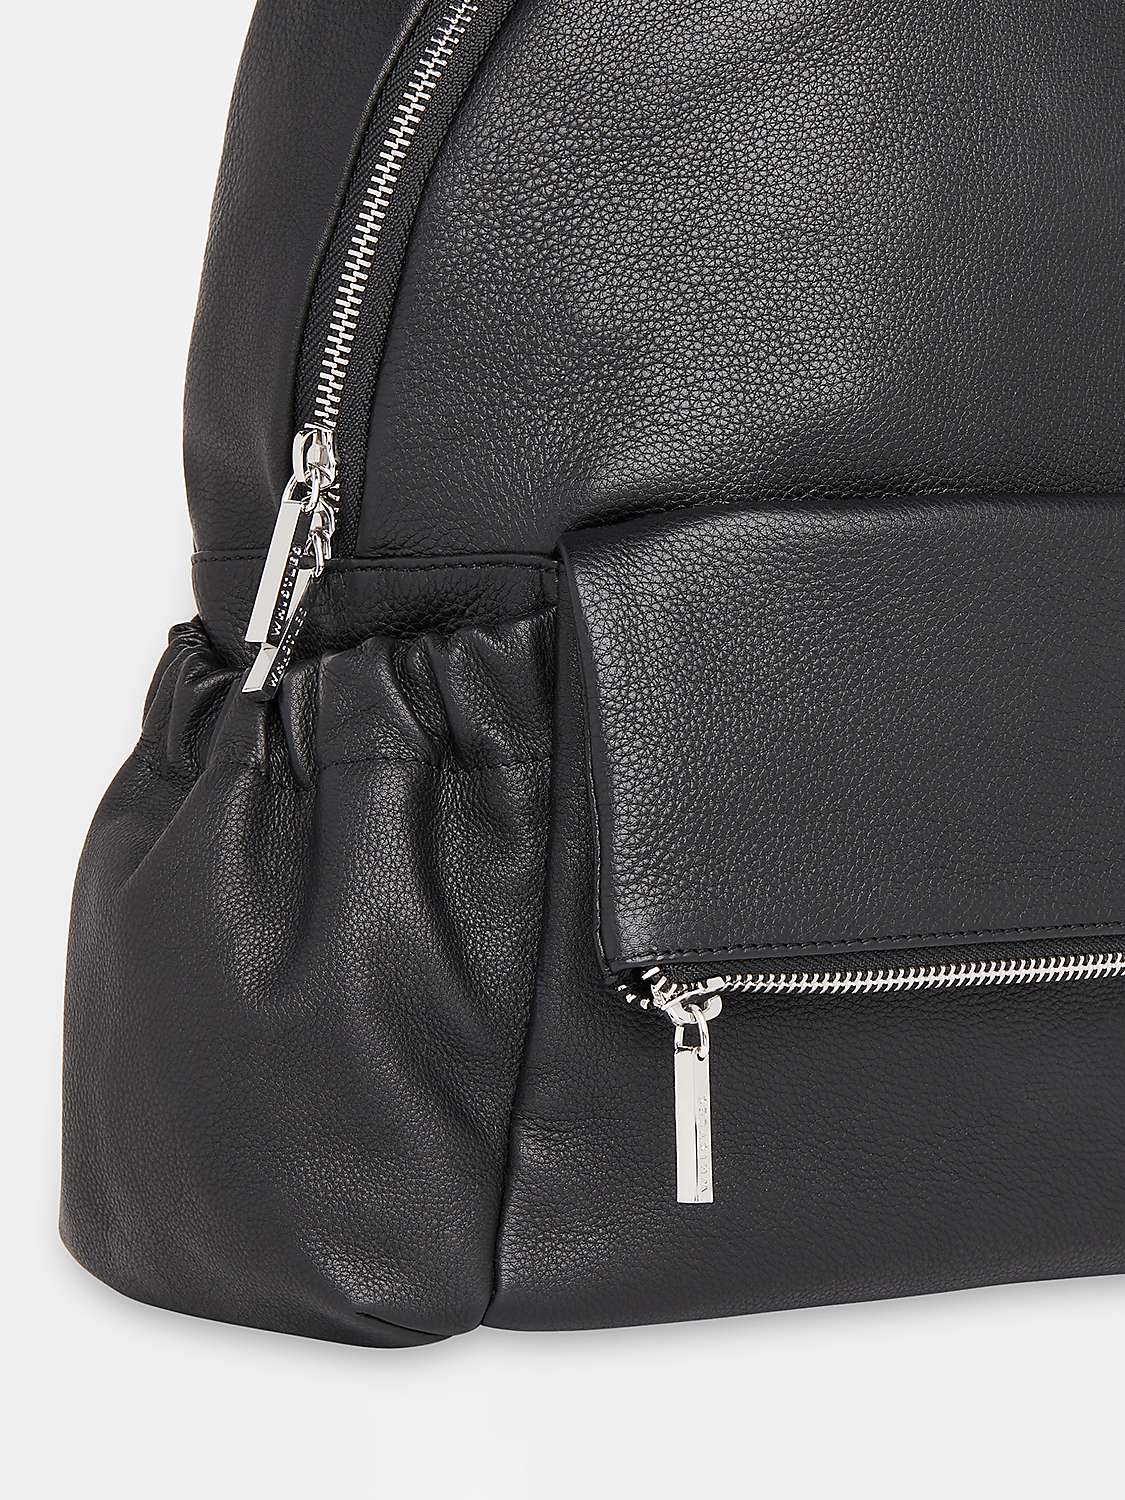 Buy Whistles Reya Large Leather Backpack, Black Online at johnlewis.com